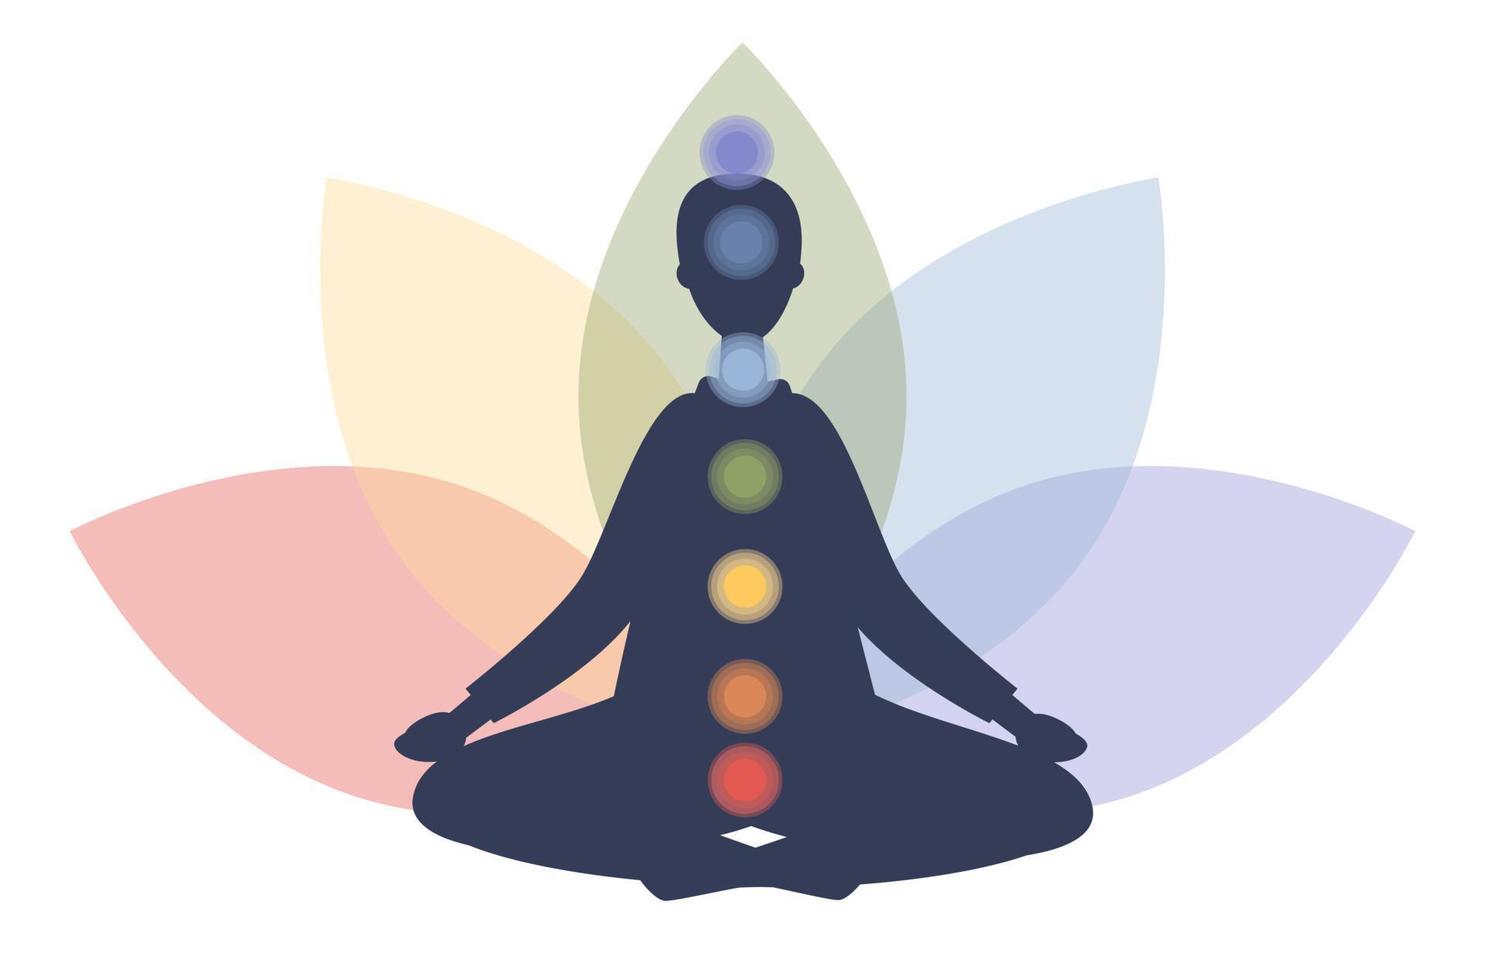 Charakter Sitzung im Lotus Pose. Meditation Konzept. bunt 7 Chakren. Yoga, entspannen, Erholung, gesund Lebensstil. Vektor eben Illustration